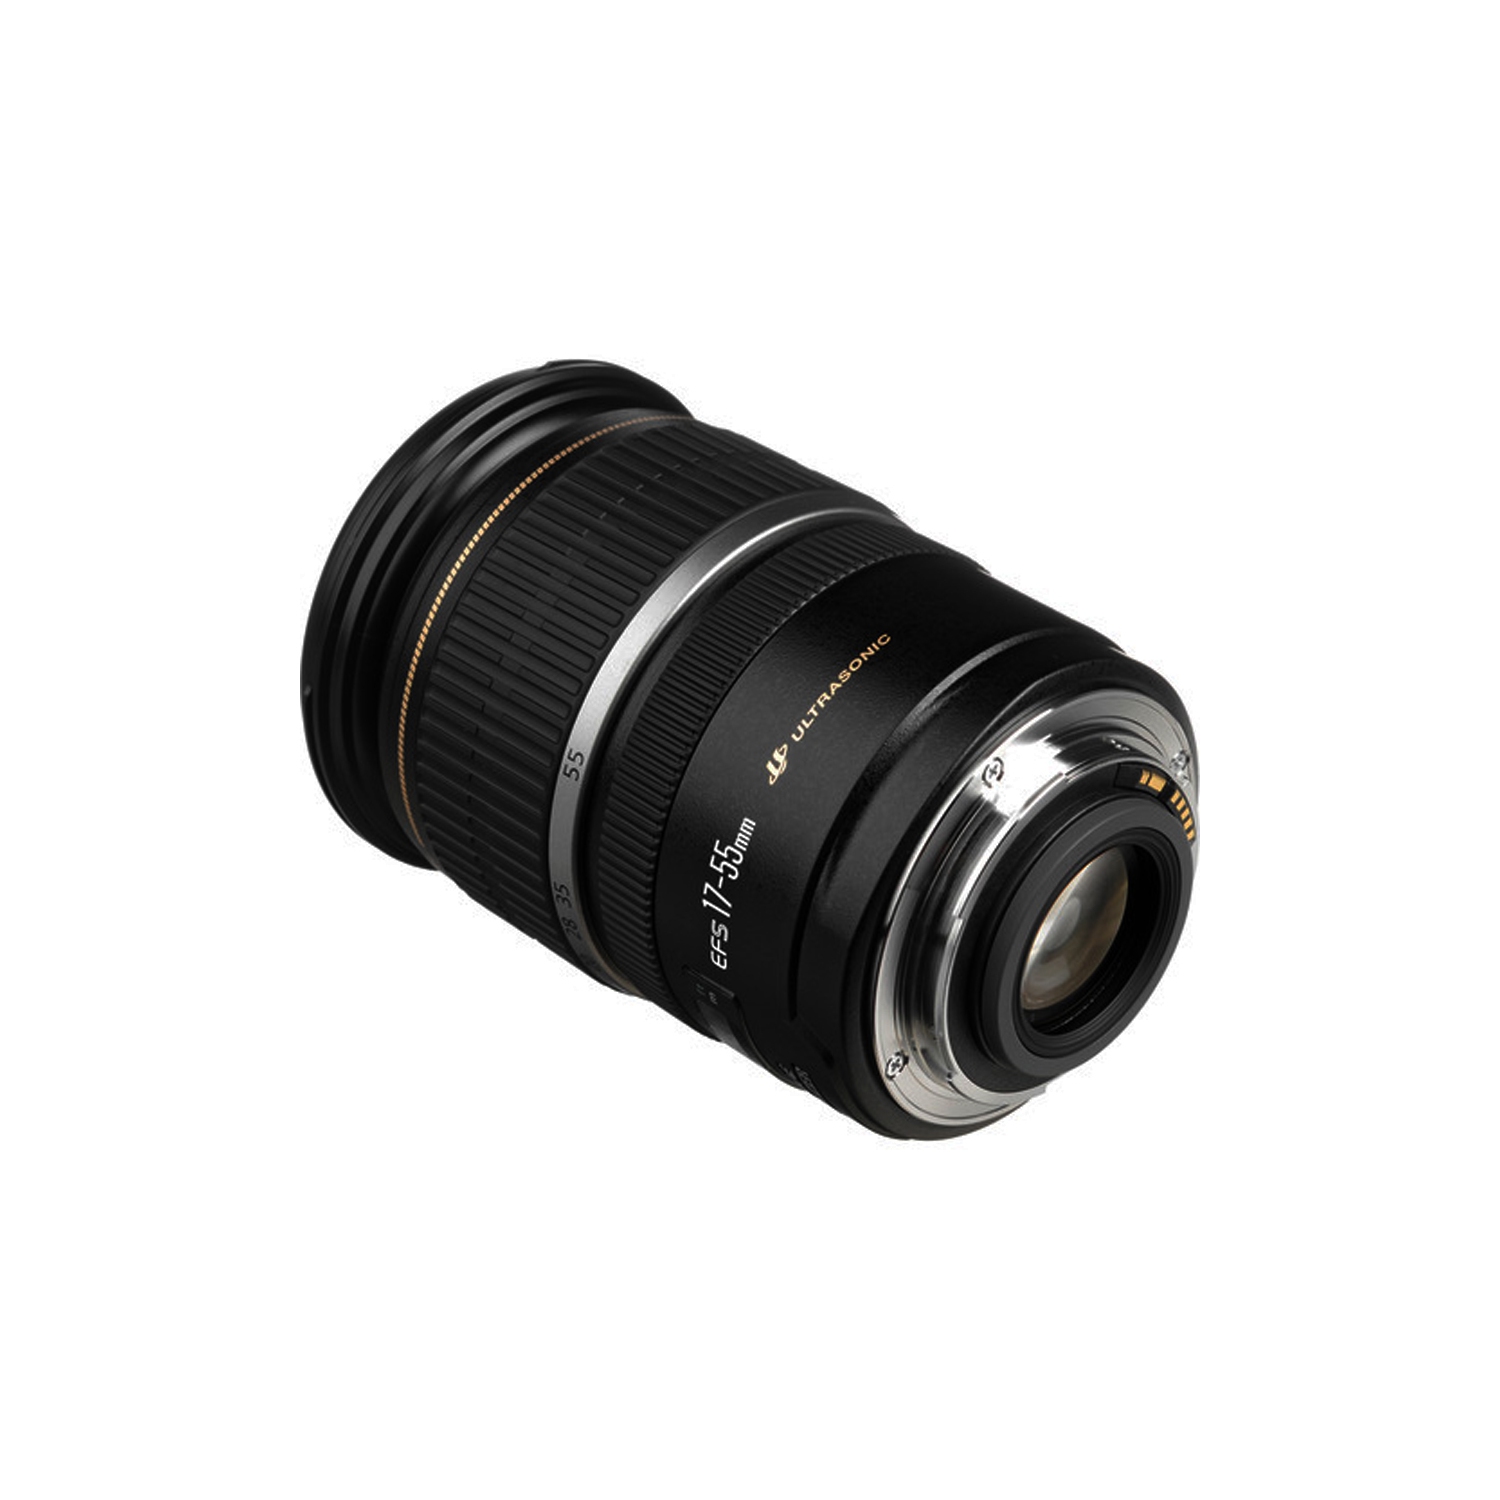 Canon 17-55mm f2.8 IS EF-S USM Lens #